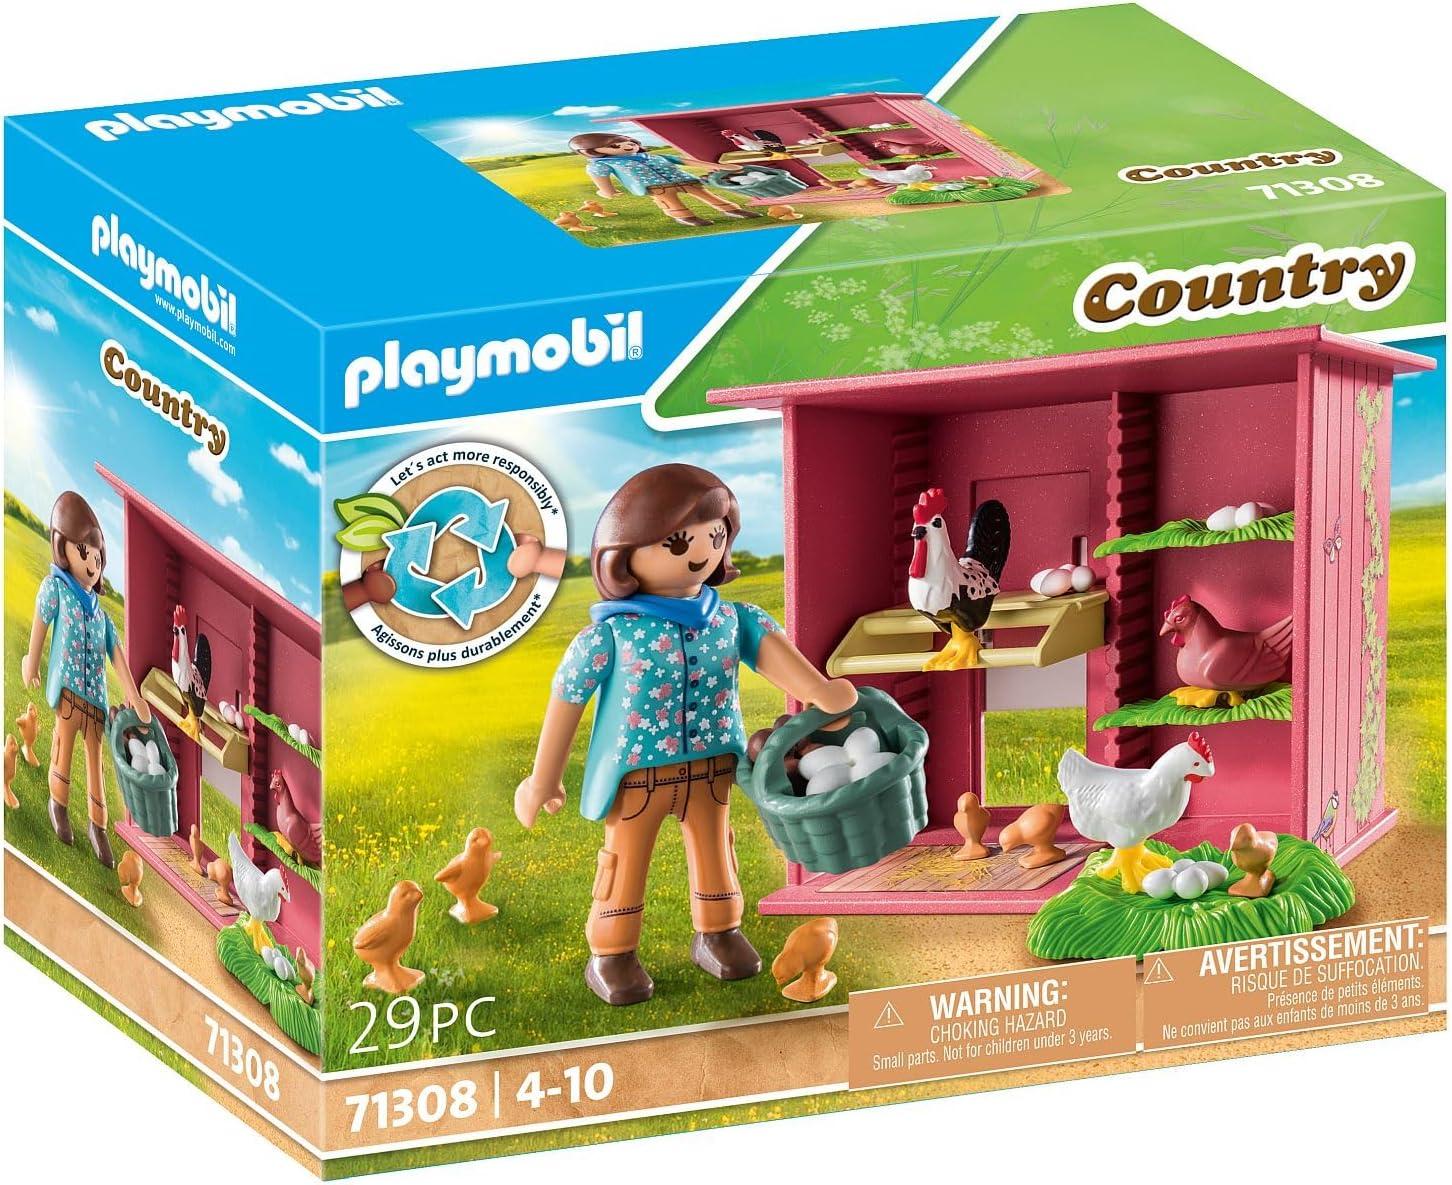 Playmobil 71308 - Country: Hühner mit Küken